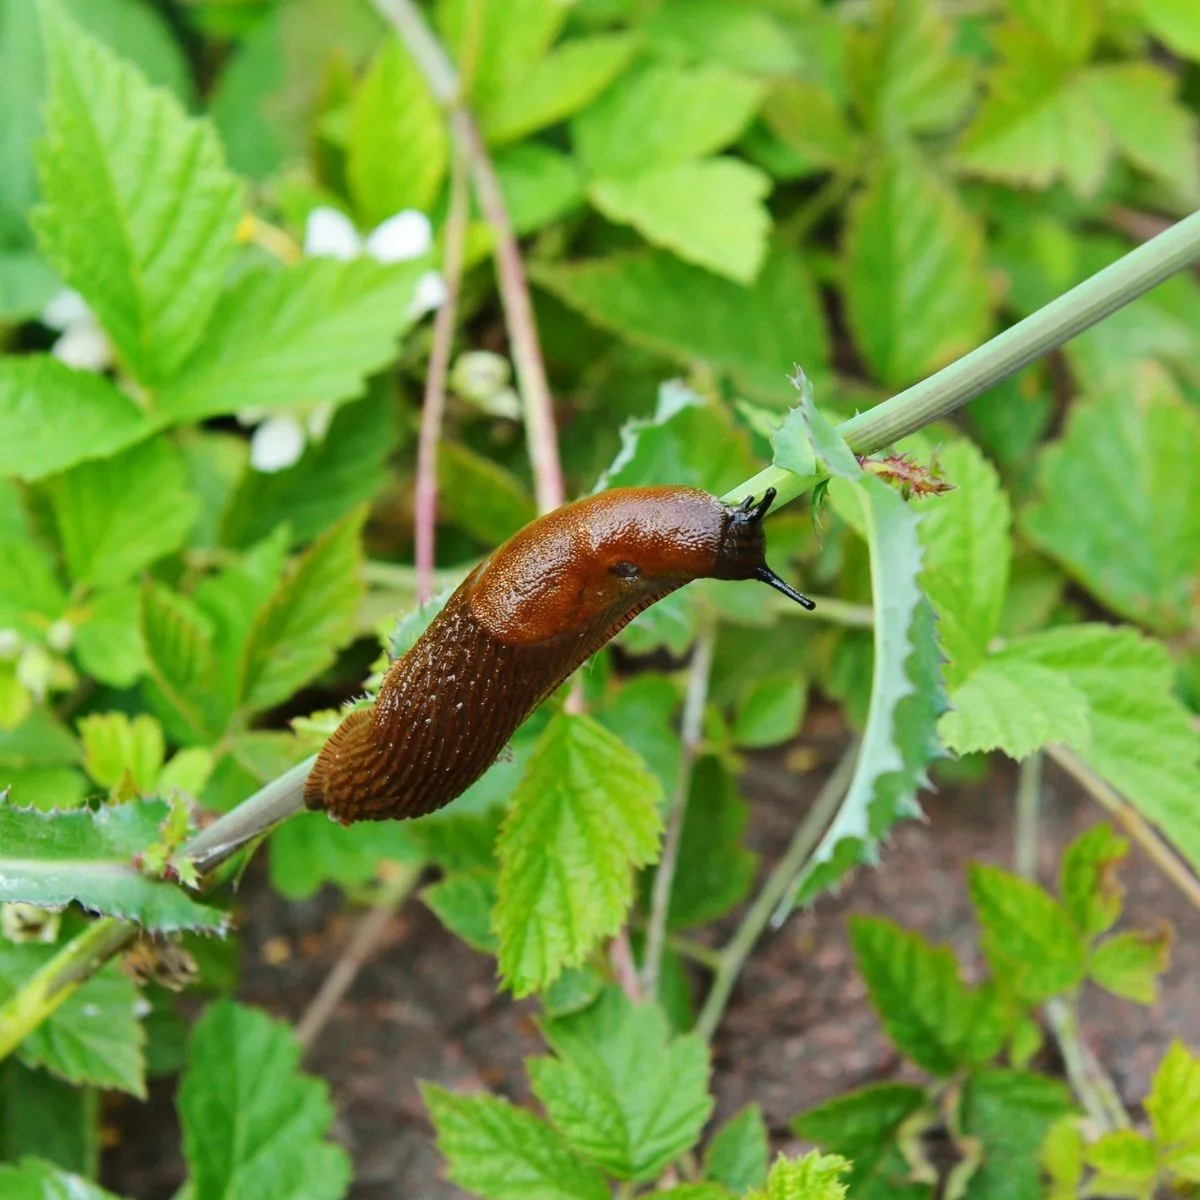 slug on leaves in the grarden